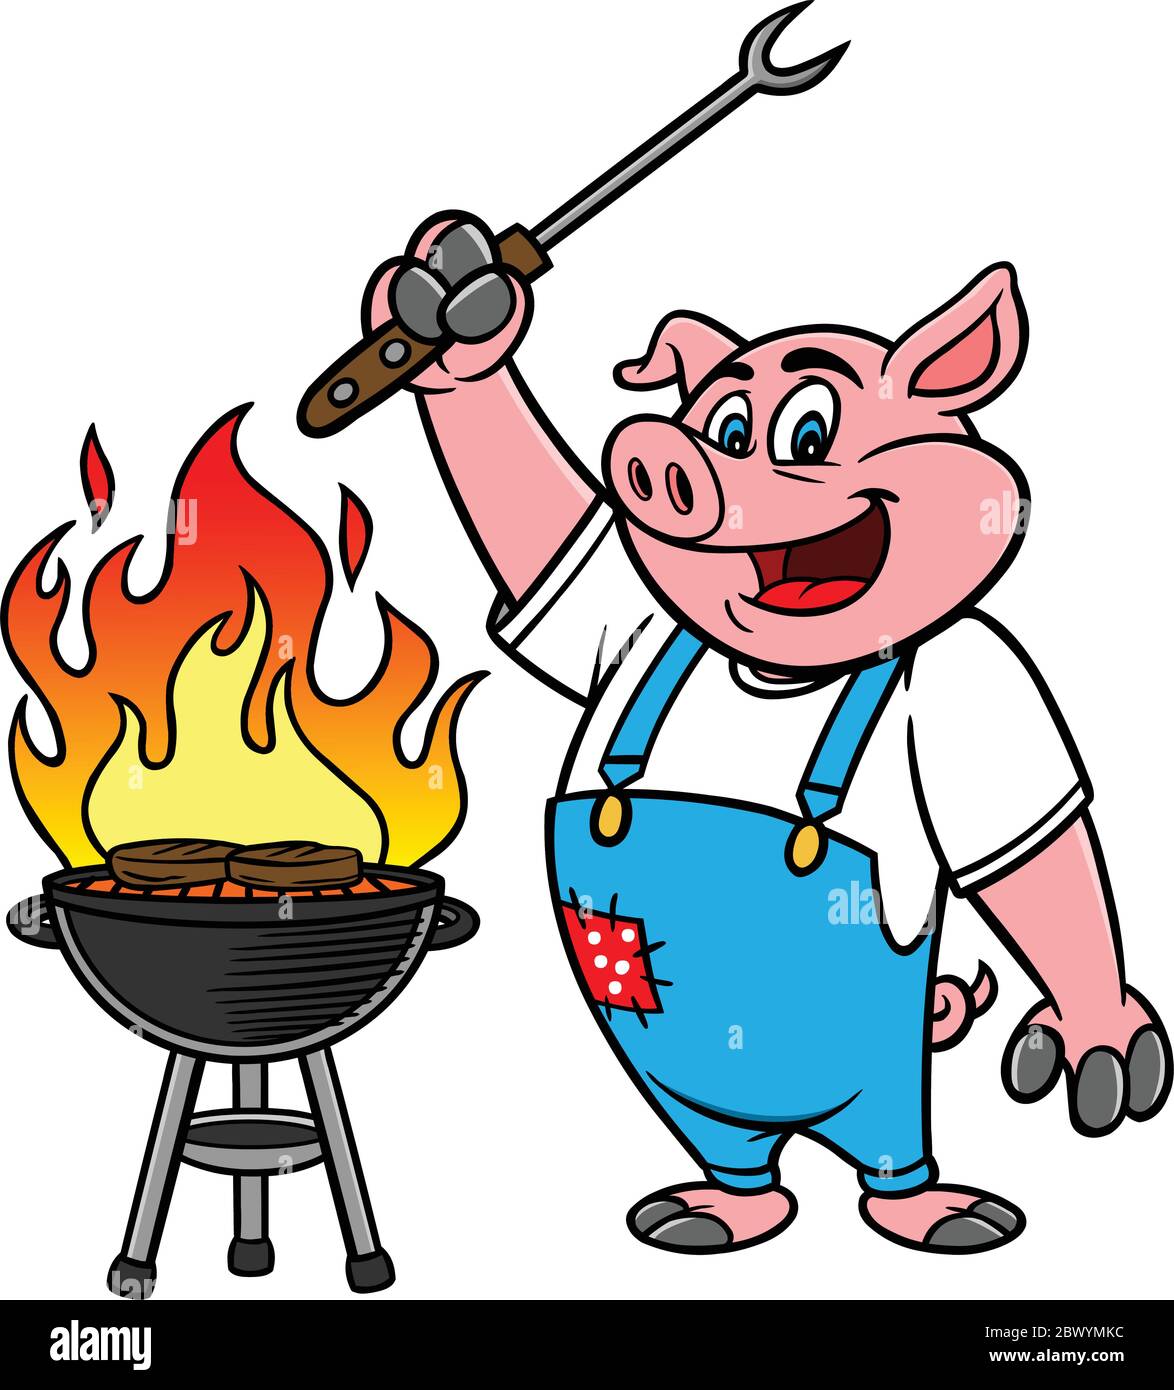 Bbq Grilling Pig A Cartoon Illustration Of A Bbq Grilling Pig Stock